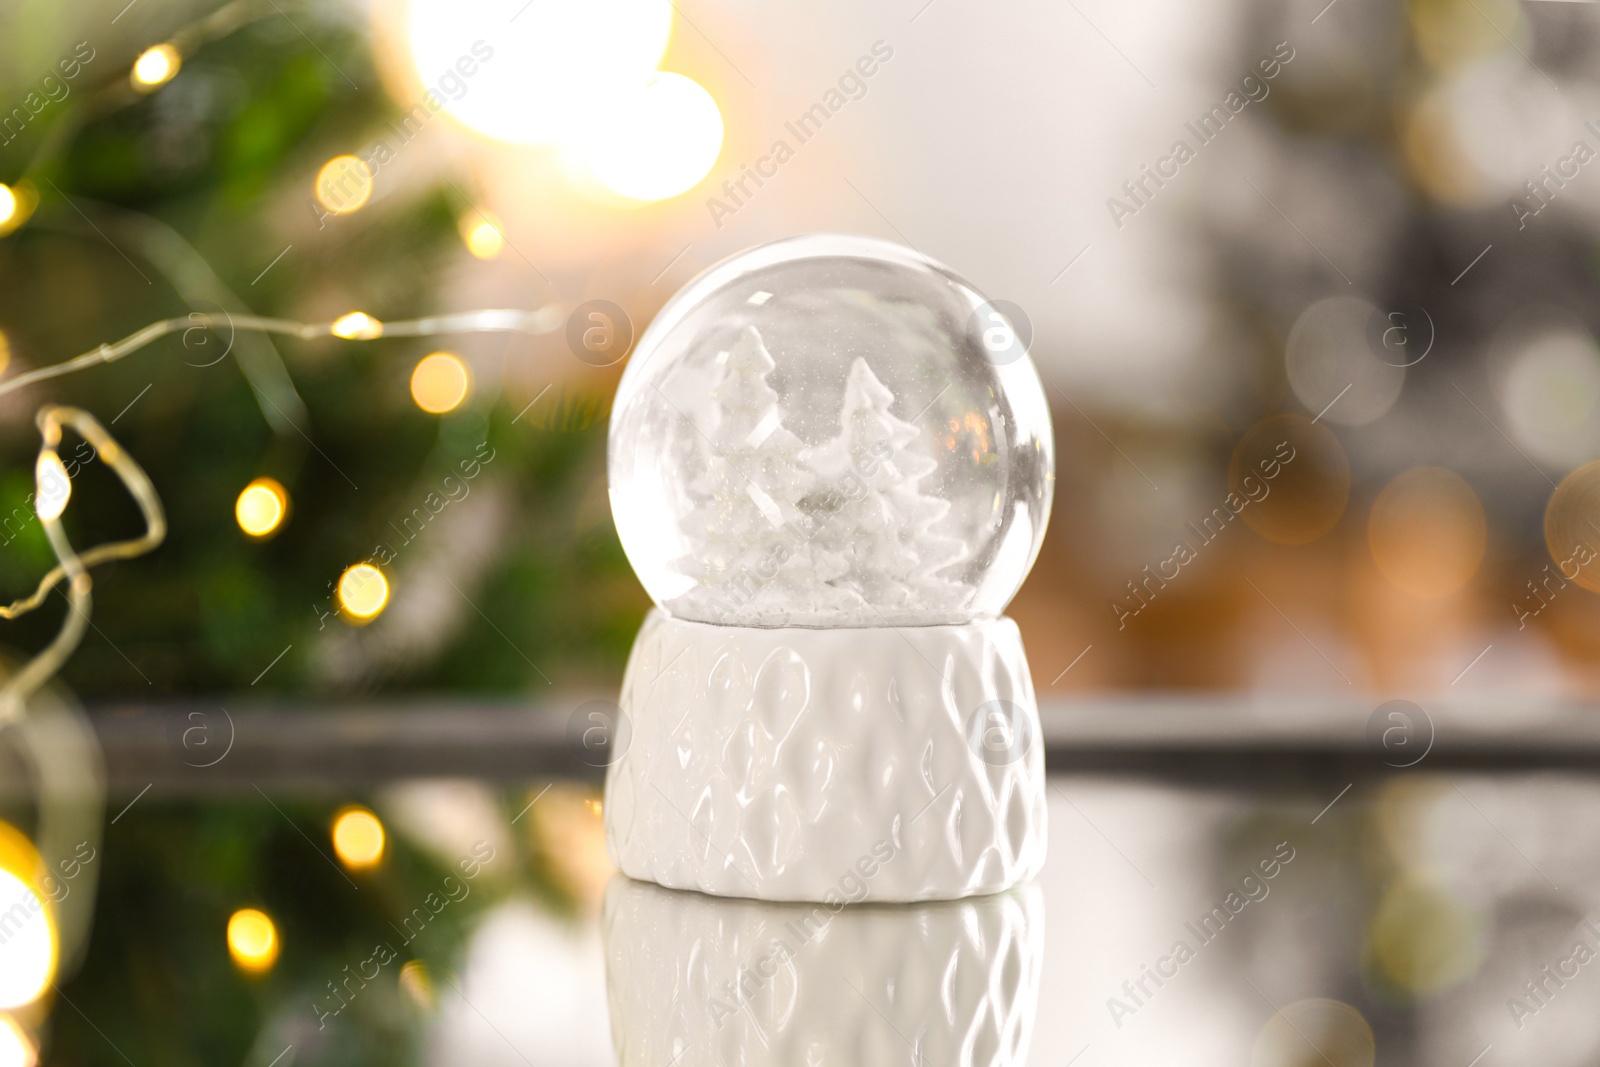 Photo of Decorative Christmas snow globe on mirror surface